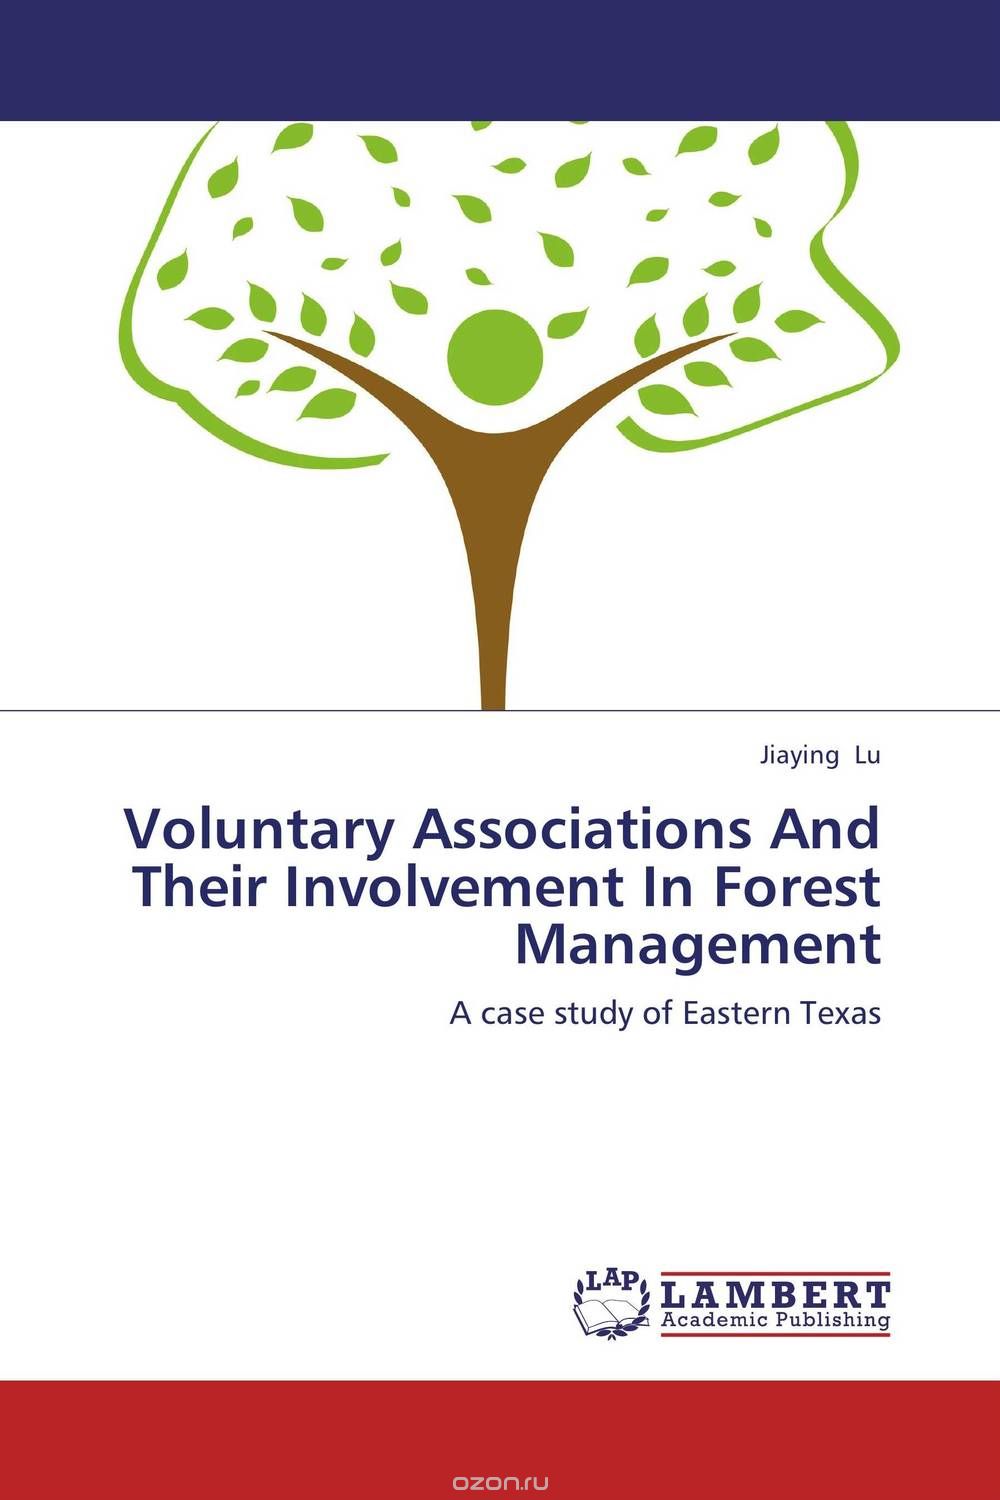 Скачать книгу "Voluntary Associations And Their Involvement In Forest Management"